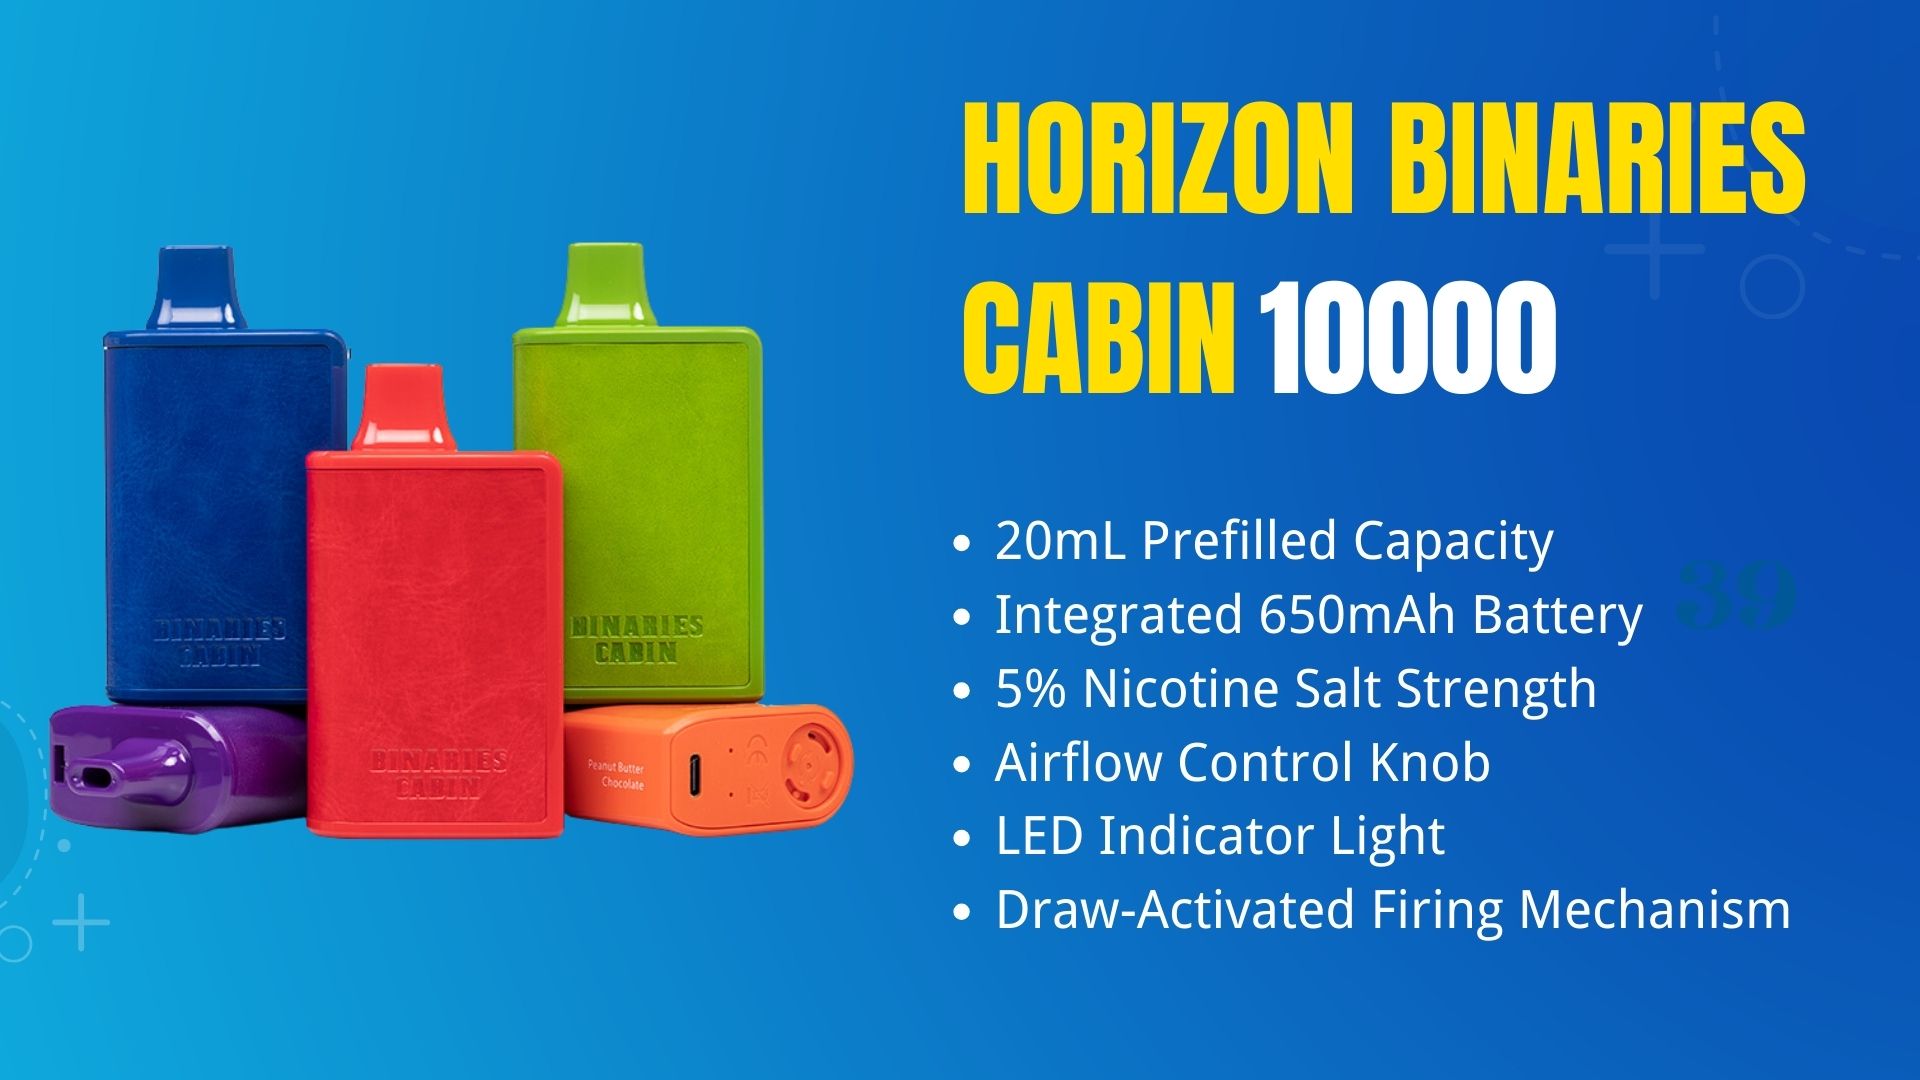 Horizon Binaries Cabin 10000